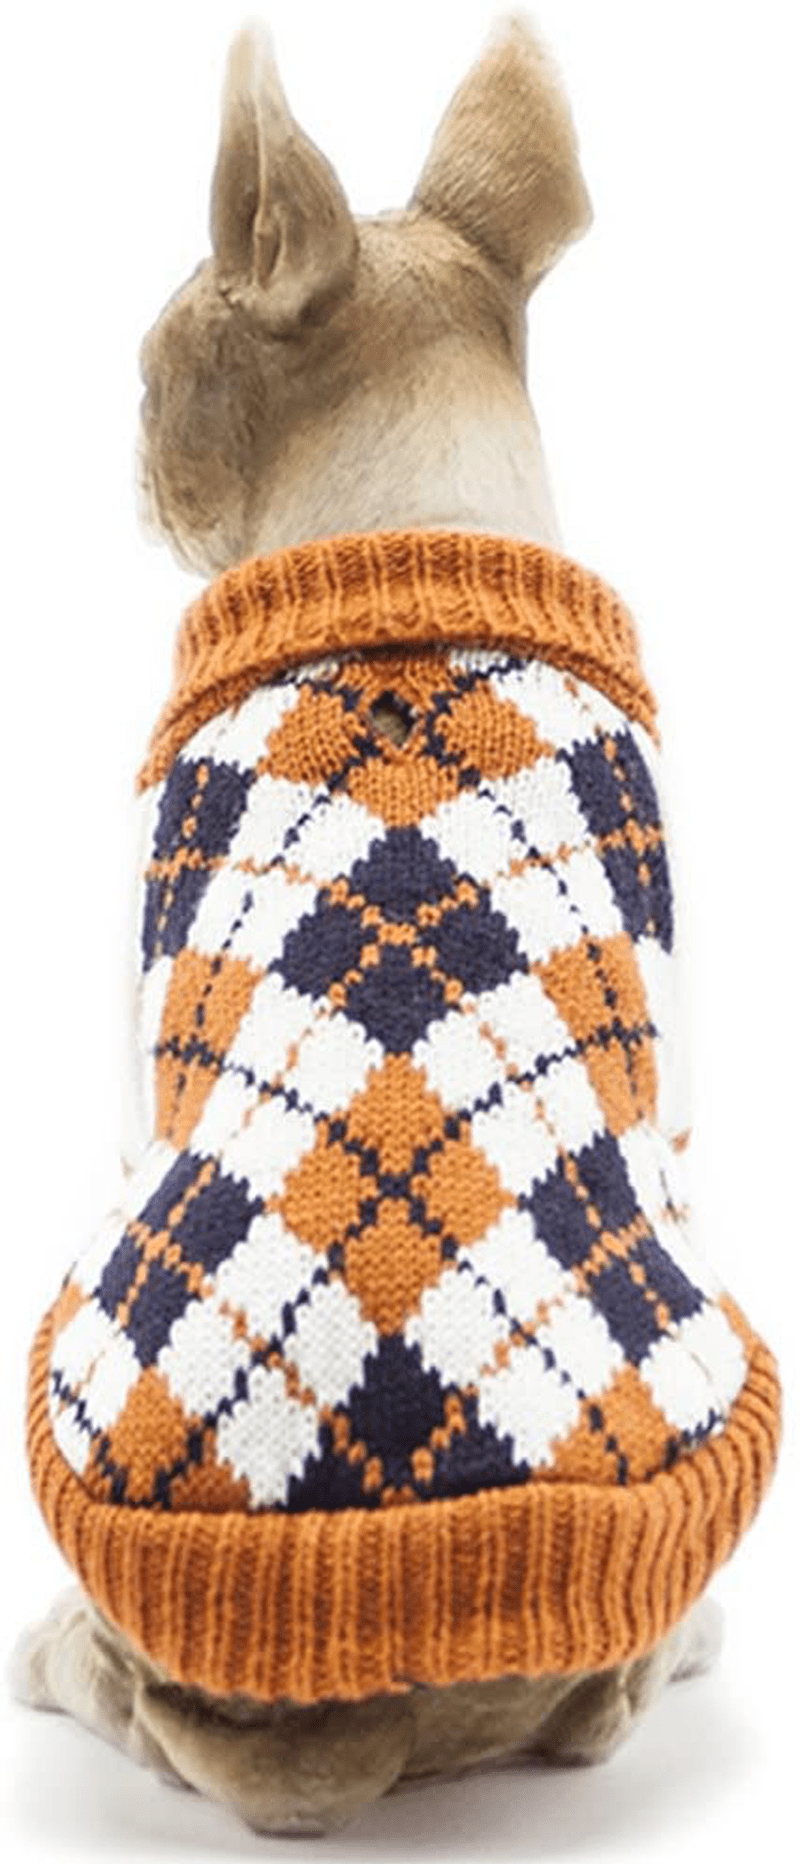 BOBIBI Dog Sweater of the Diamond Plaid Pet Cat Winter Knitwear Warm Clothes,Orange,Small Animals & Pet Supplies > Pet Supplies > Dog Supplies > Dog Apparel BOBIBI   